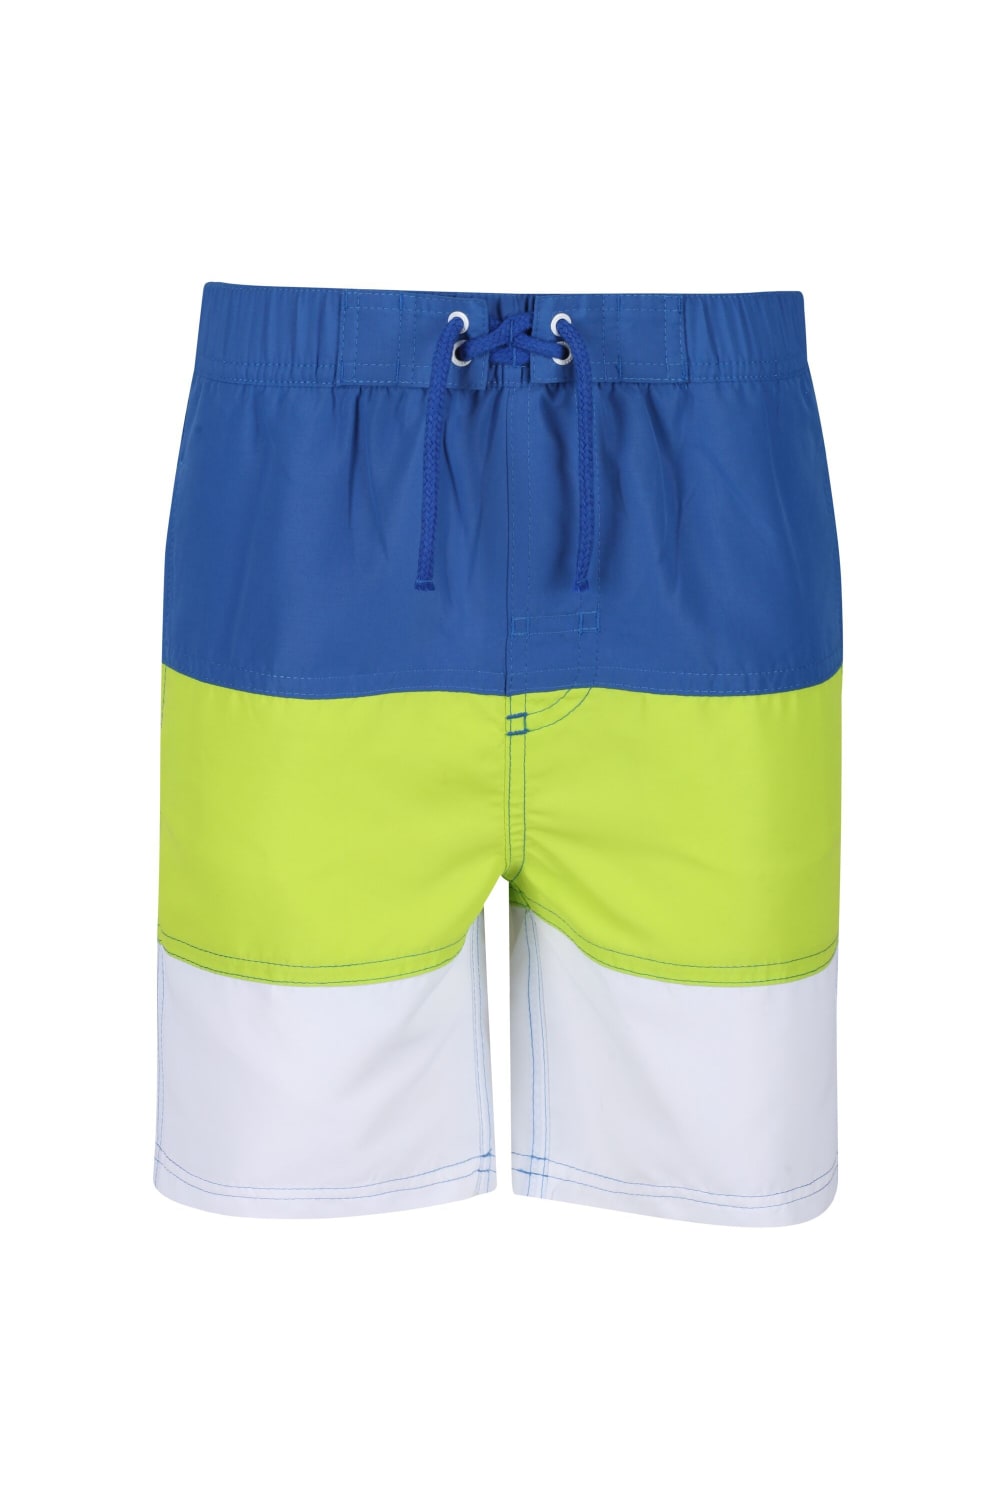 Boys Shaul III Swim Shorts - Nautical Blue/Electric Lime